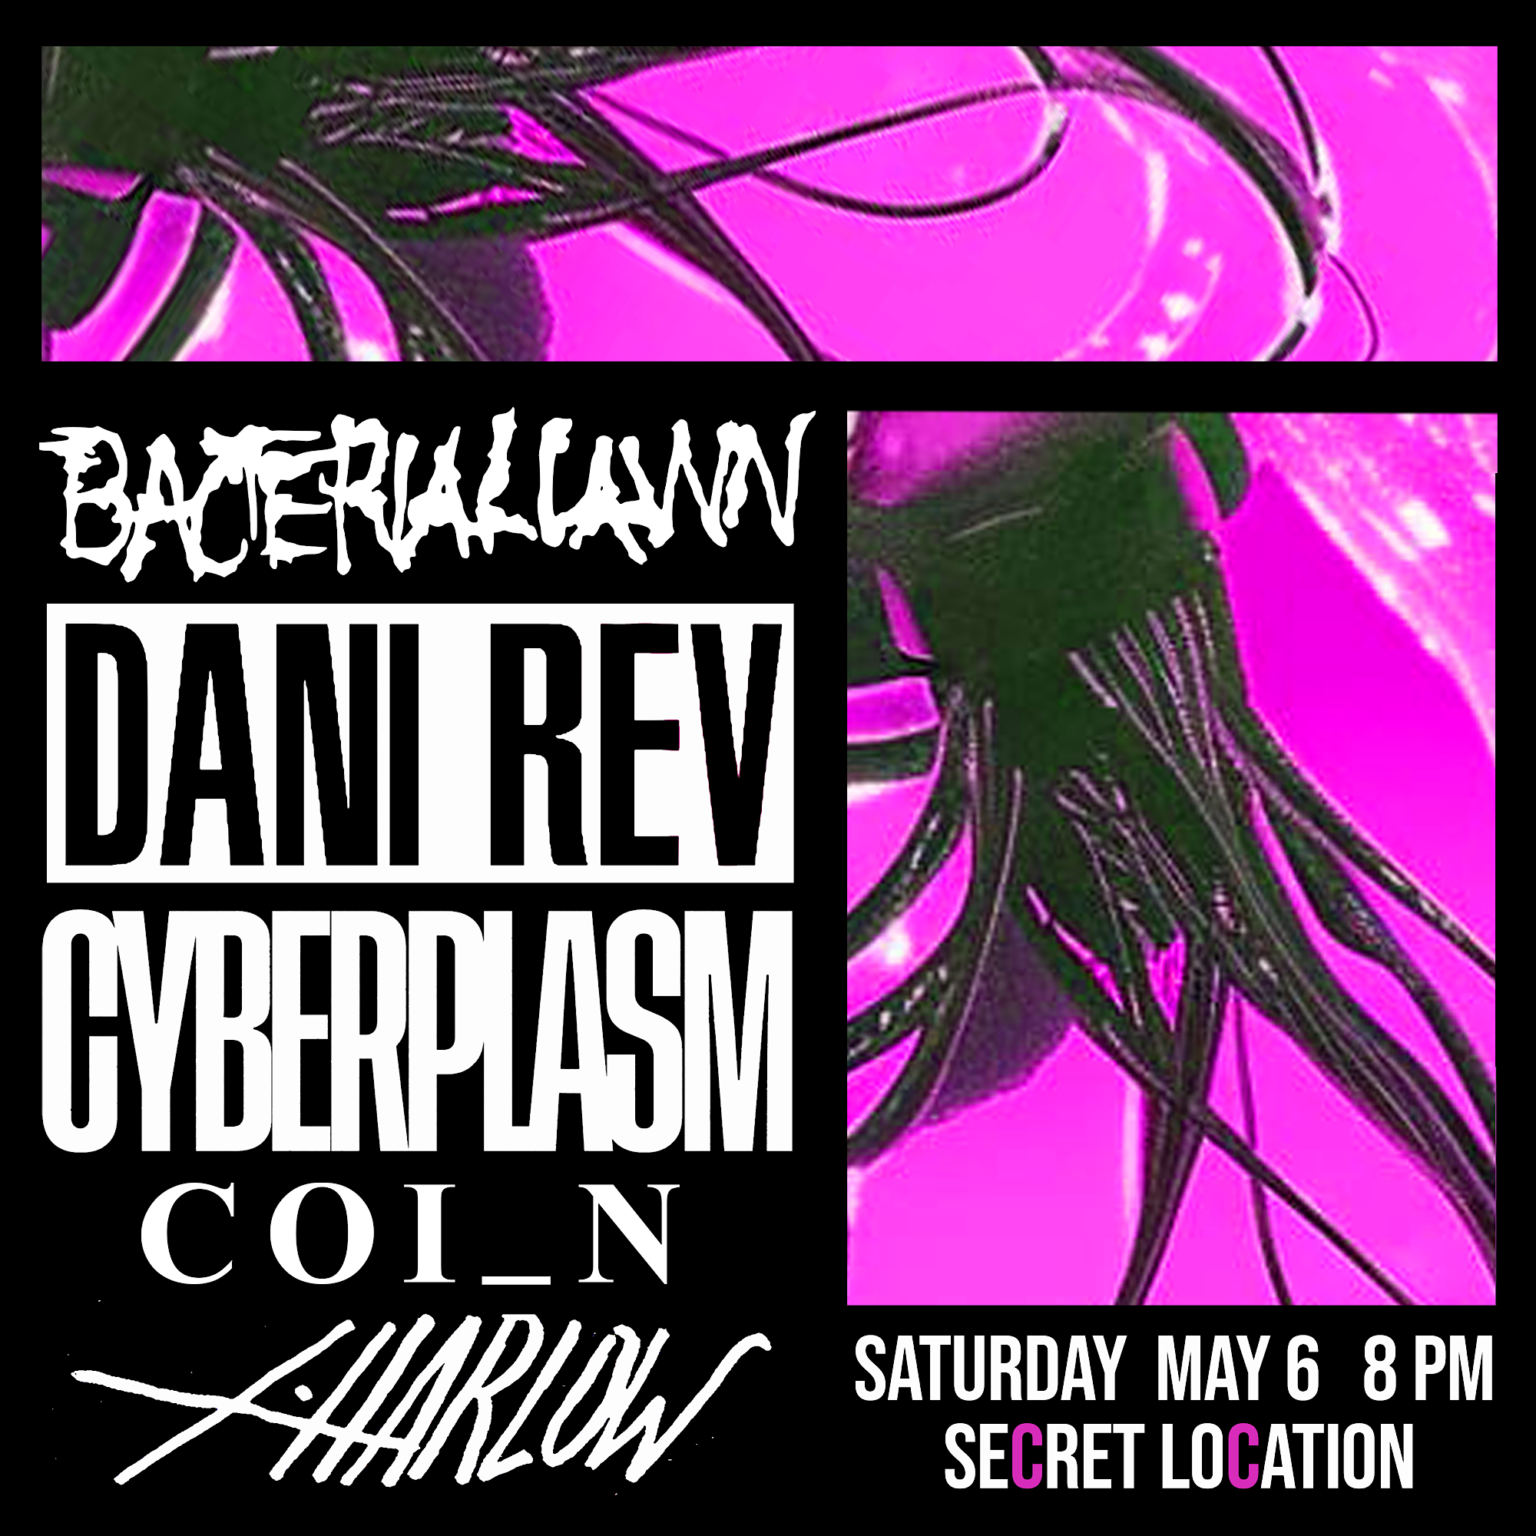 Bacterial Lawn / Dani Rev / Cyberplasm / COI_N / X. Harlow - Página frontal